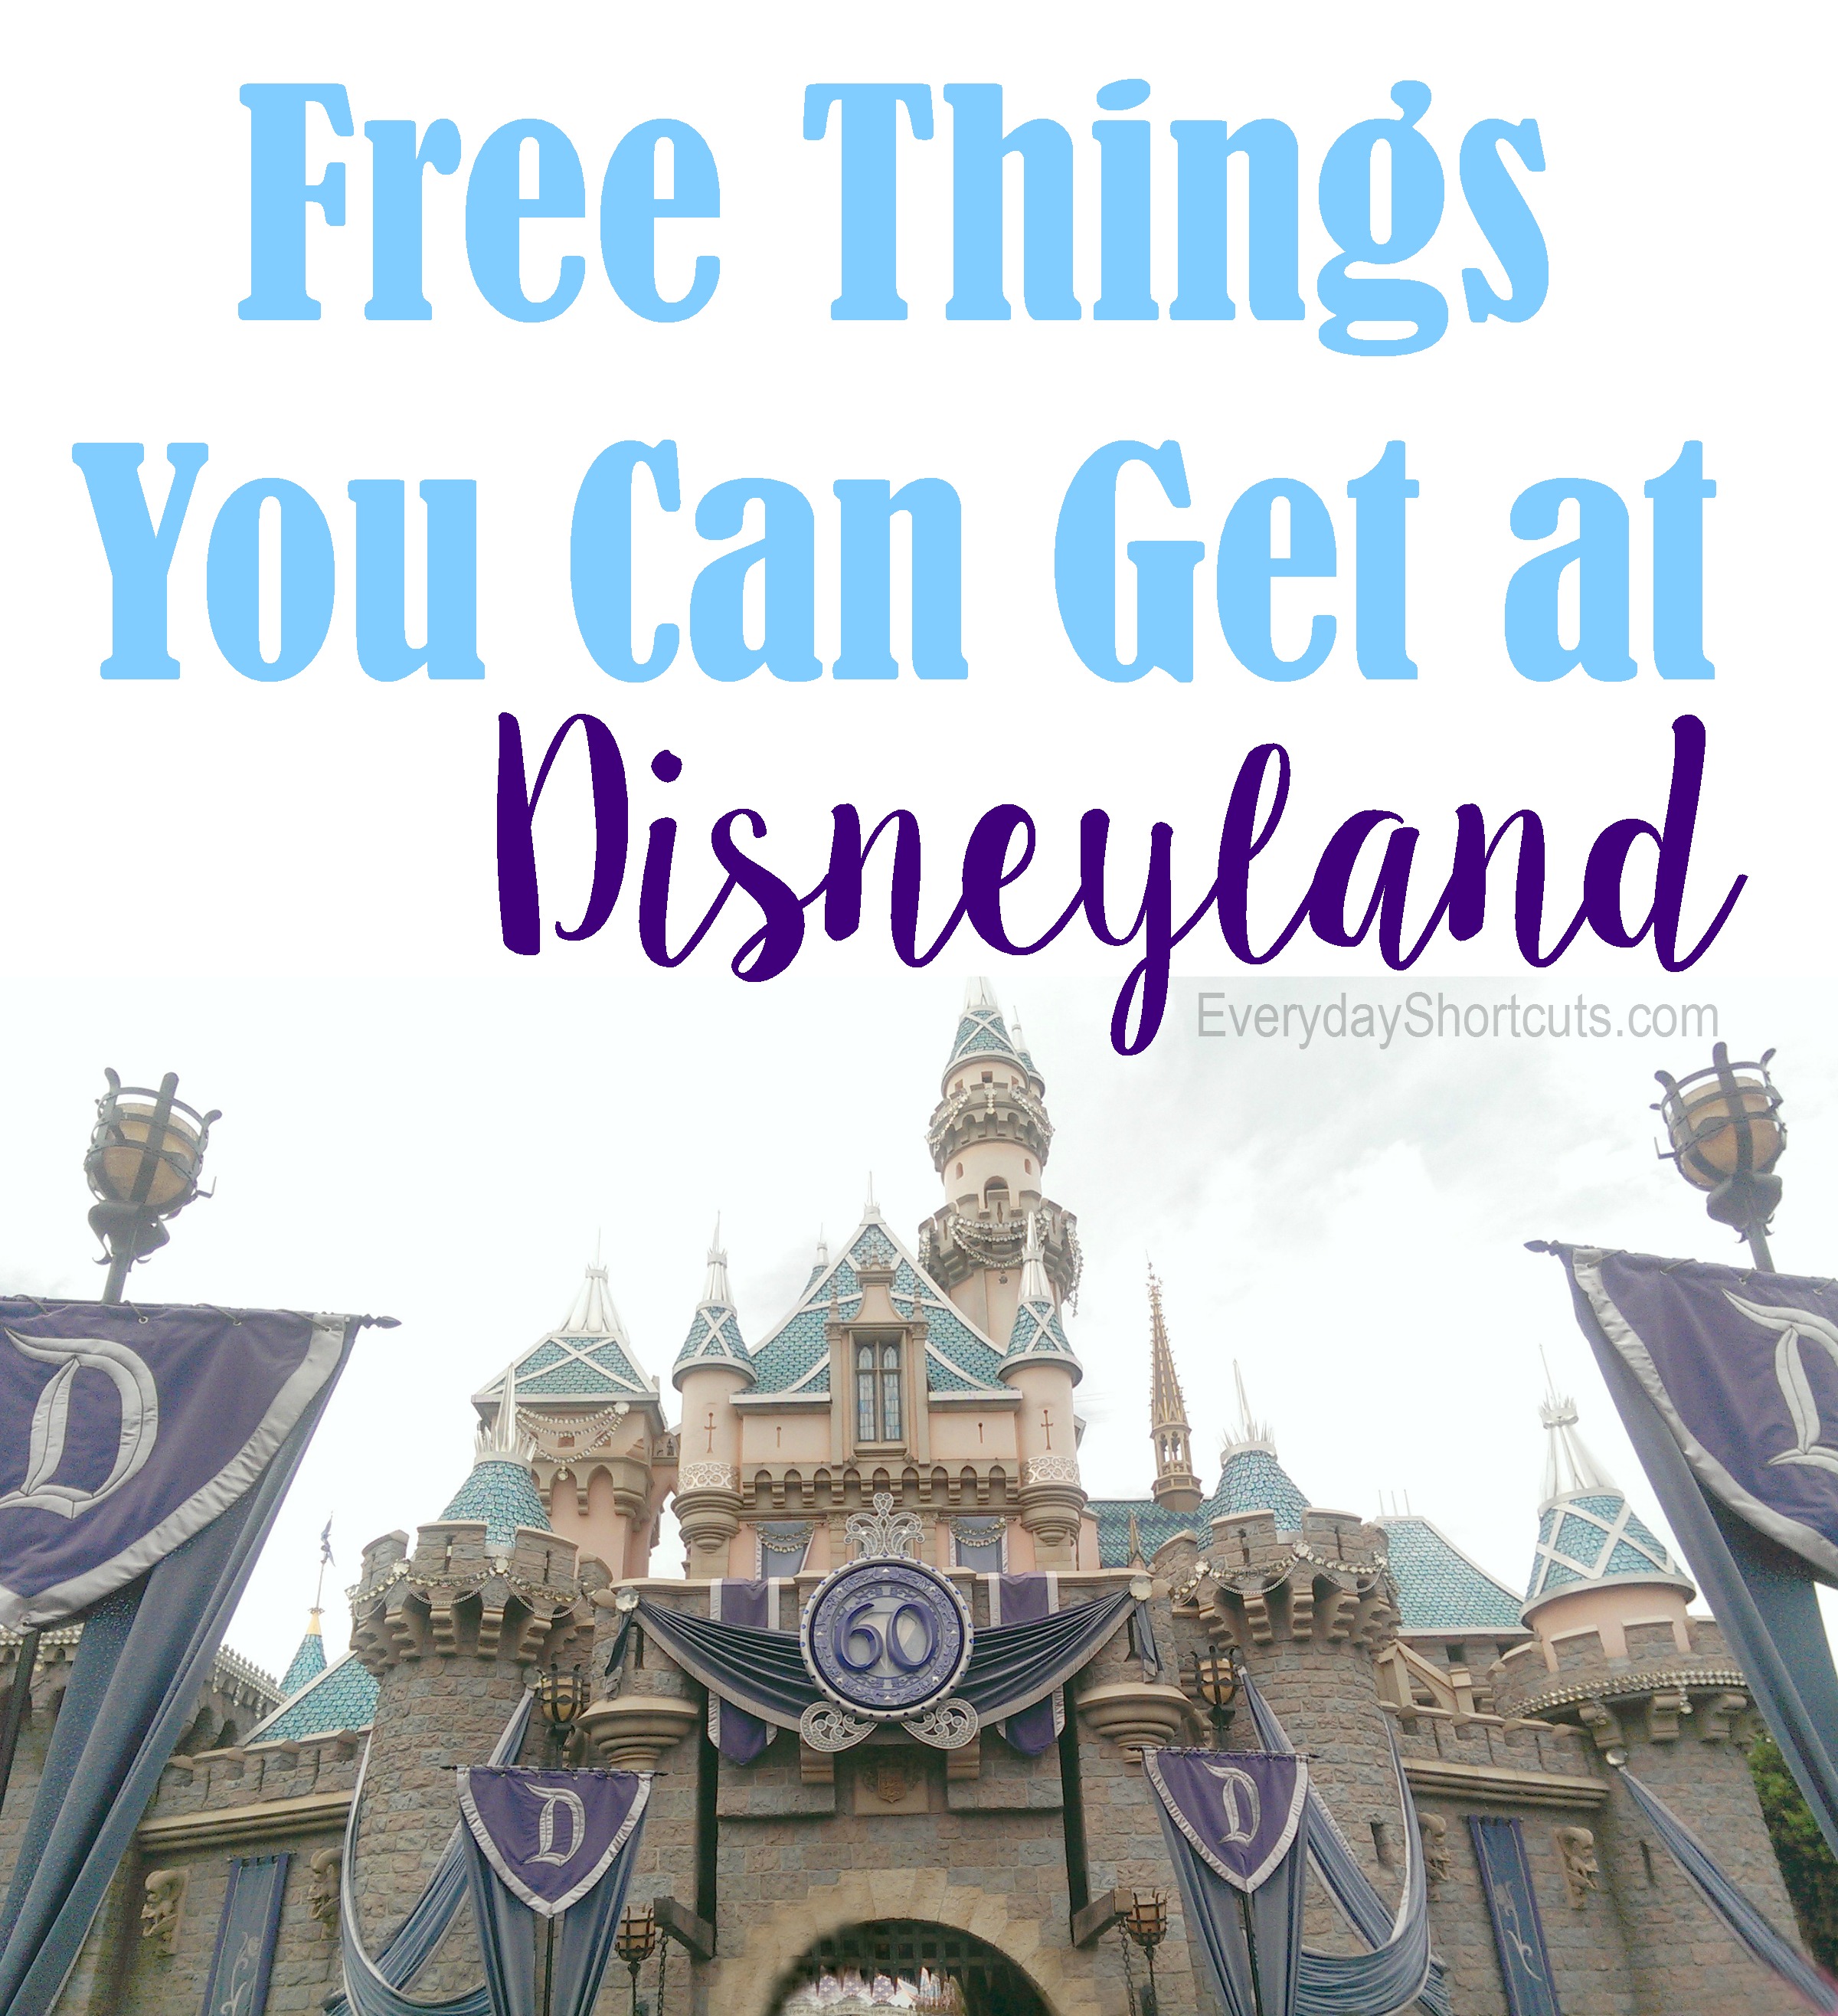 Free Things You Can Get at Disneyland